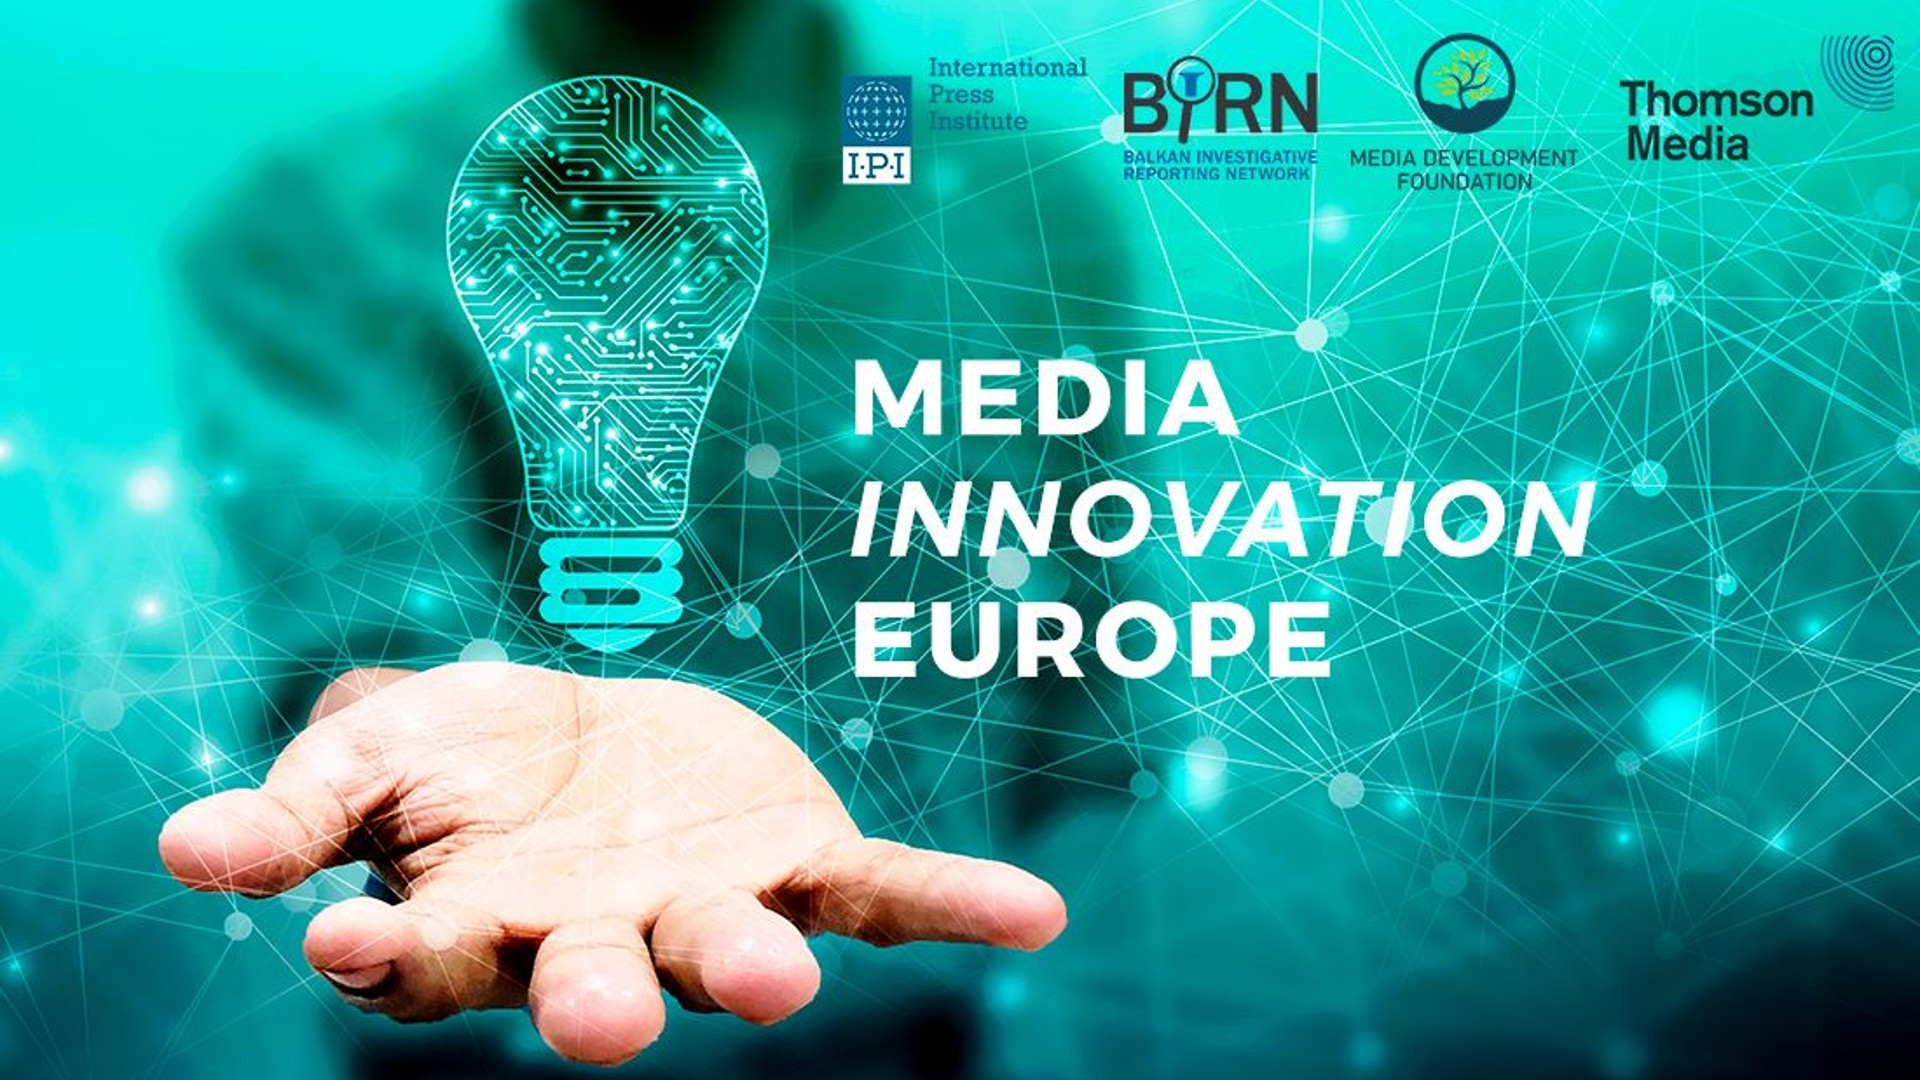 Europe: Energising the European media ecosystem